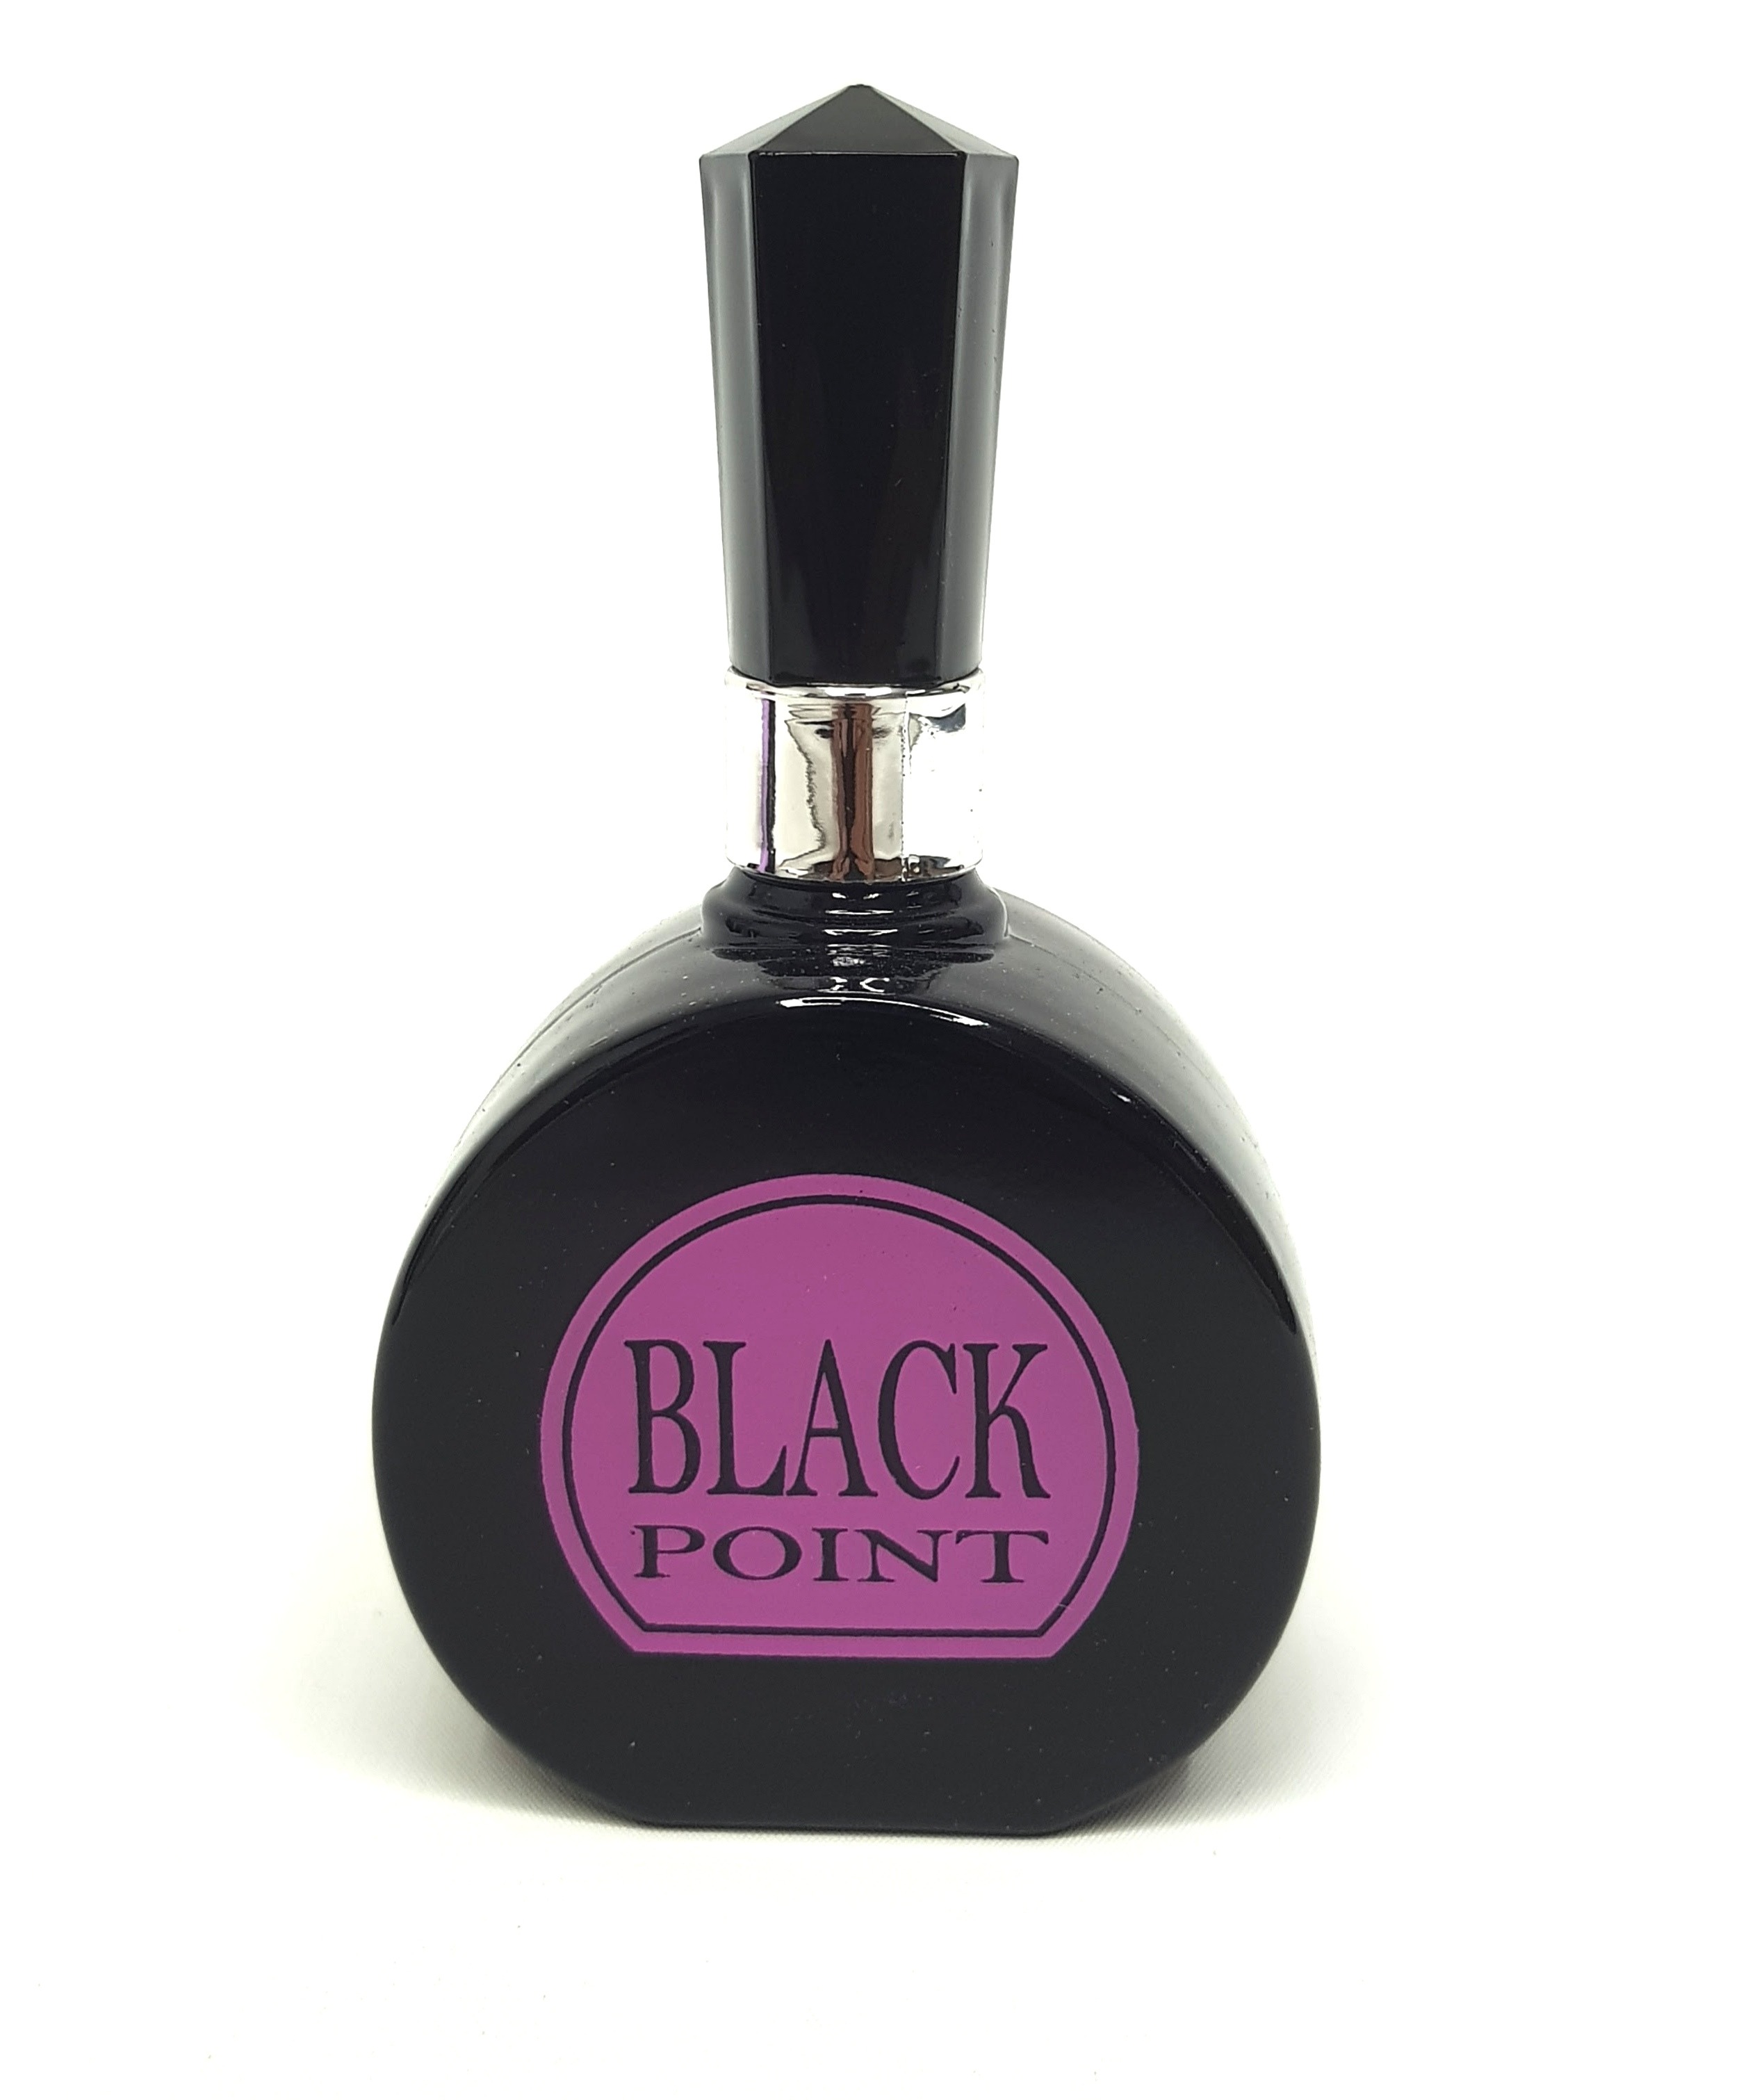 ادکلن زنانه Black Point Eau De Parfum 100ML کد 409042